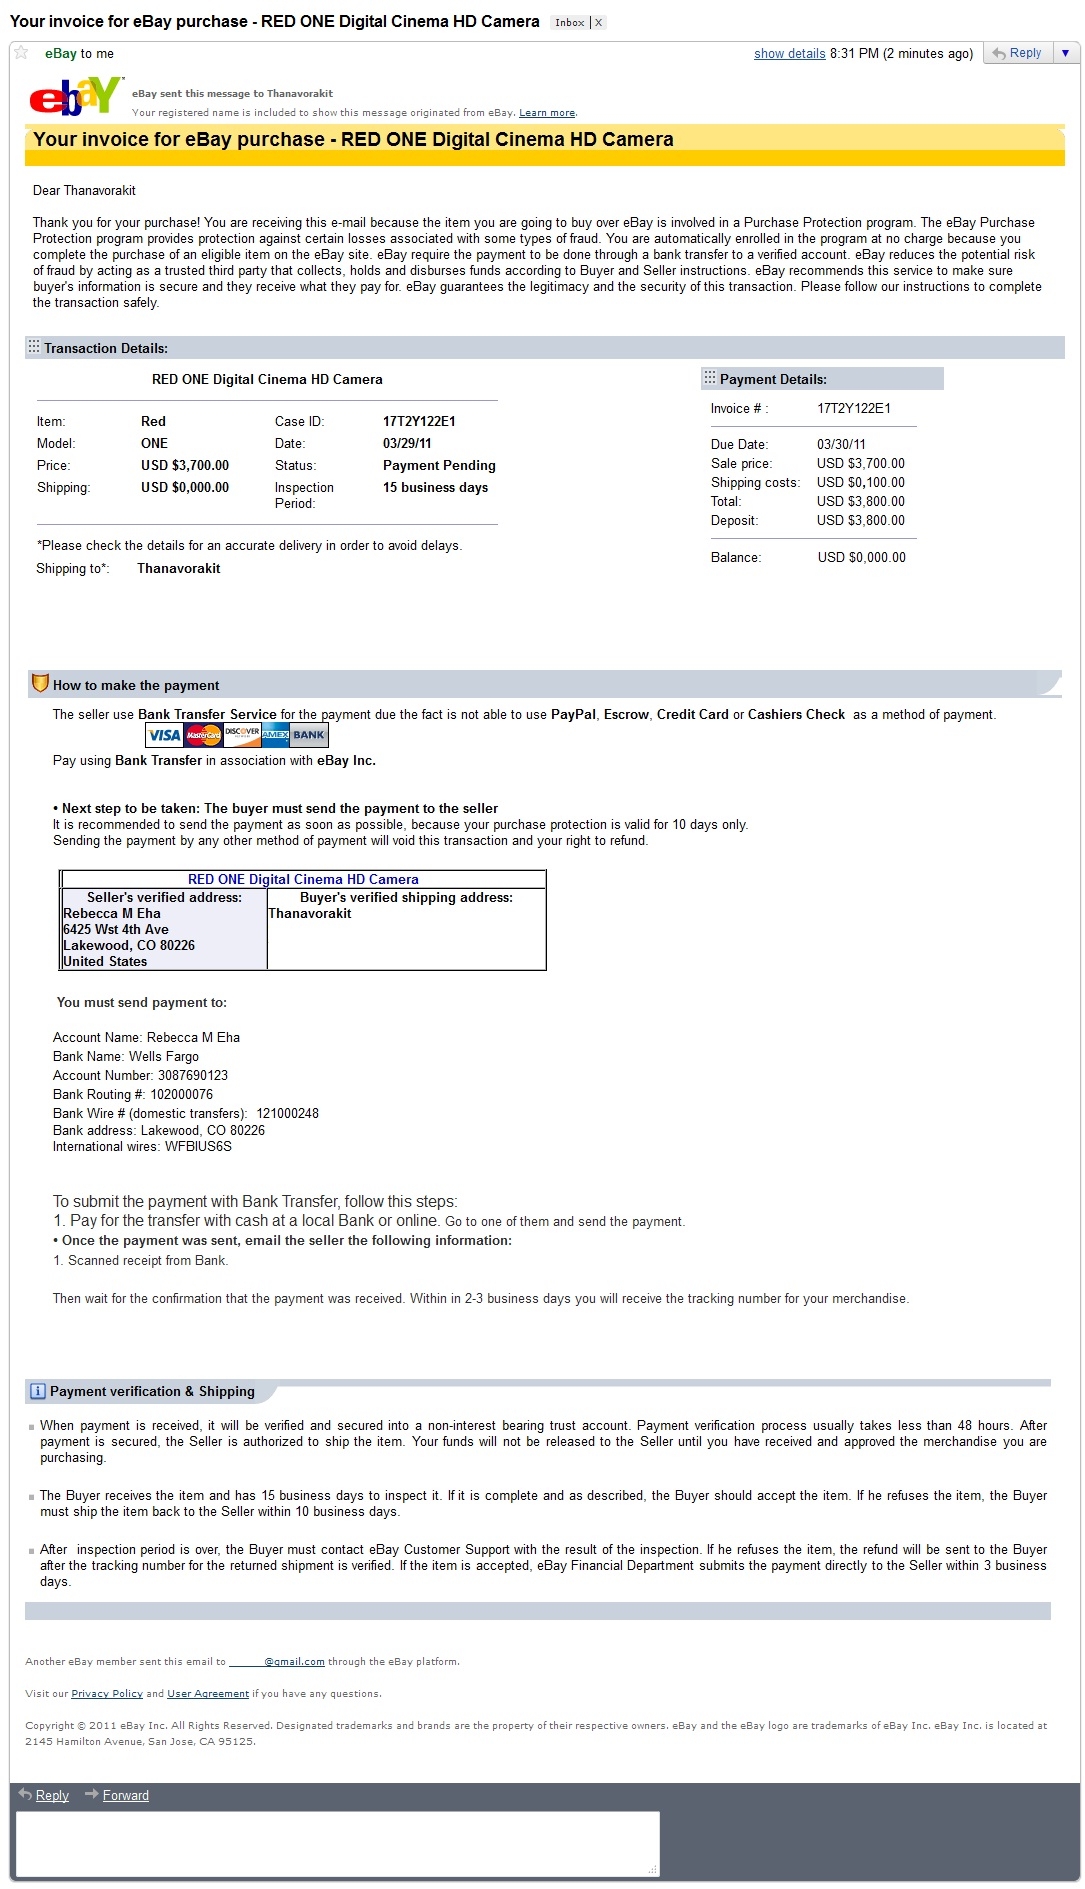 pay ebay invoice alert stolen redone camera under 4000 1085 X 1889